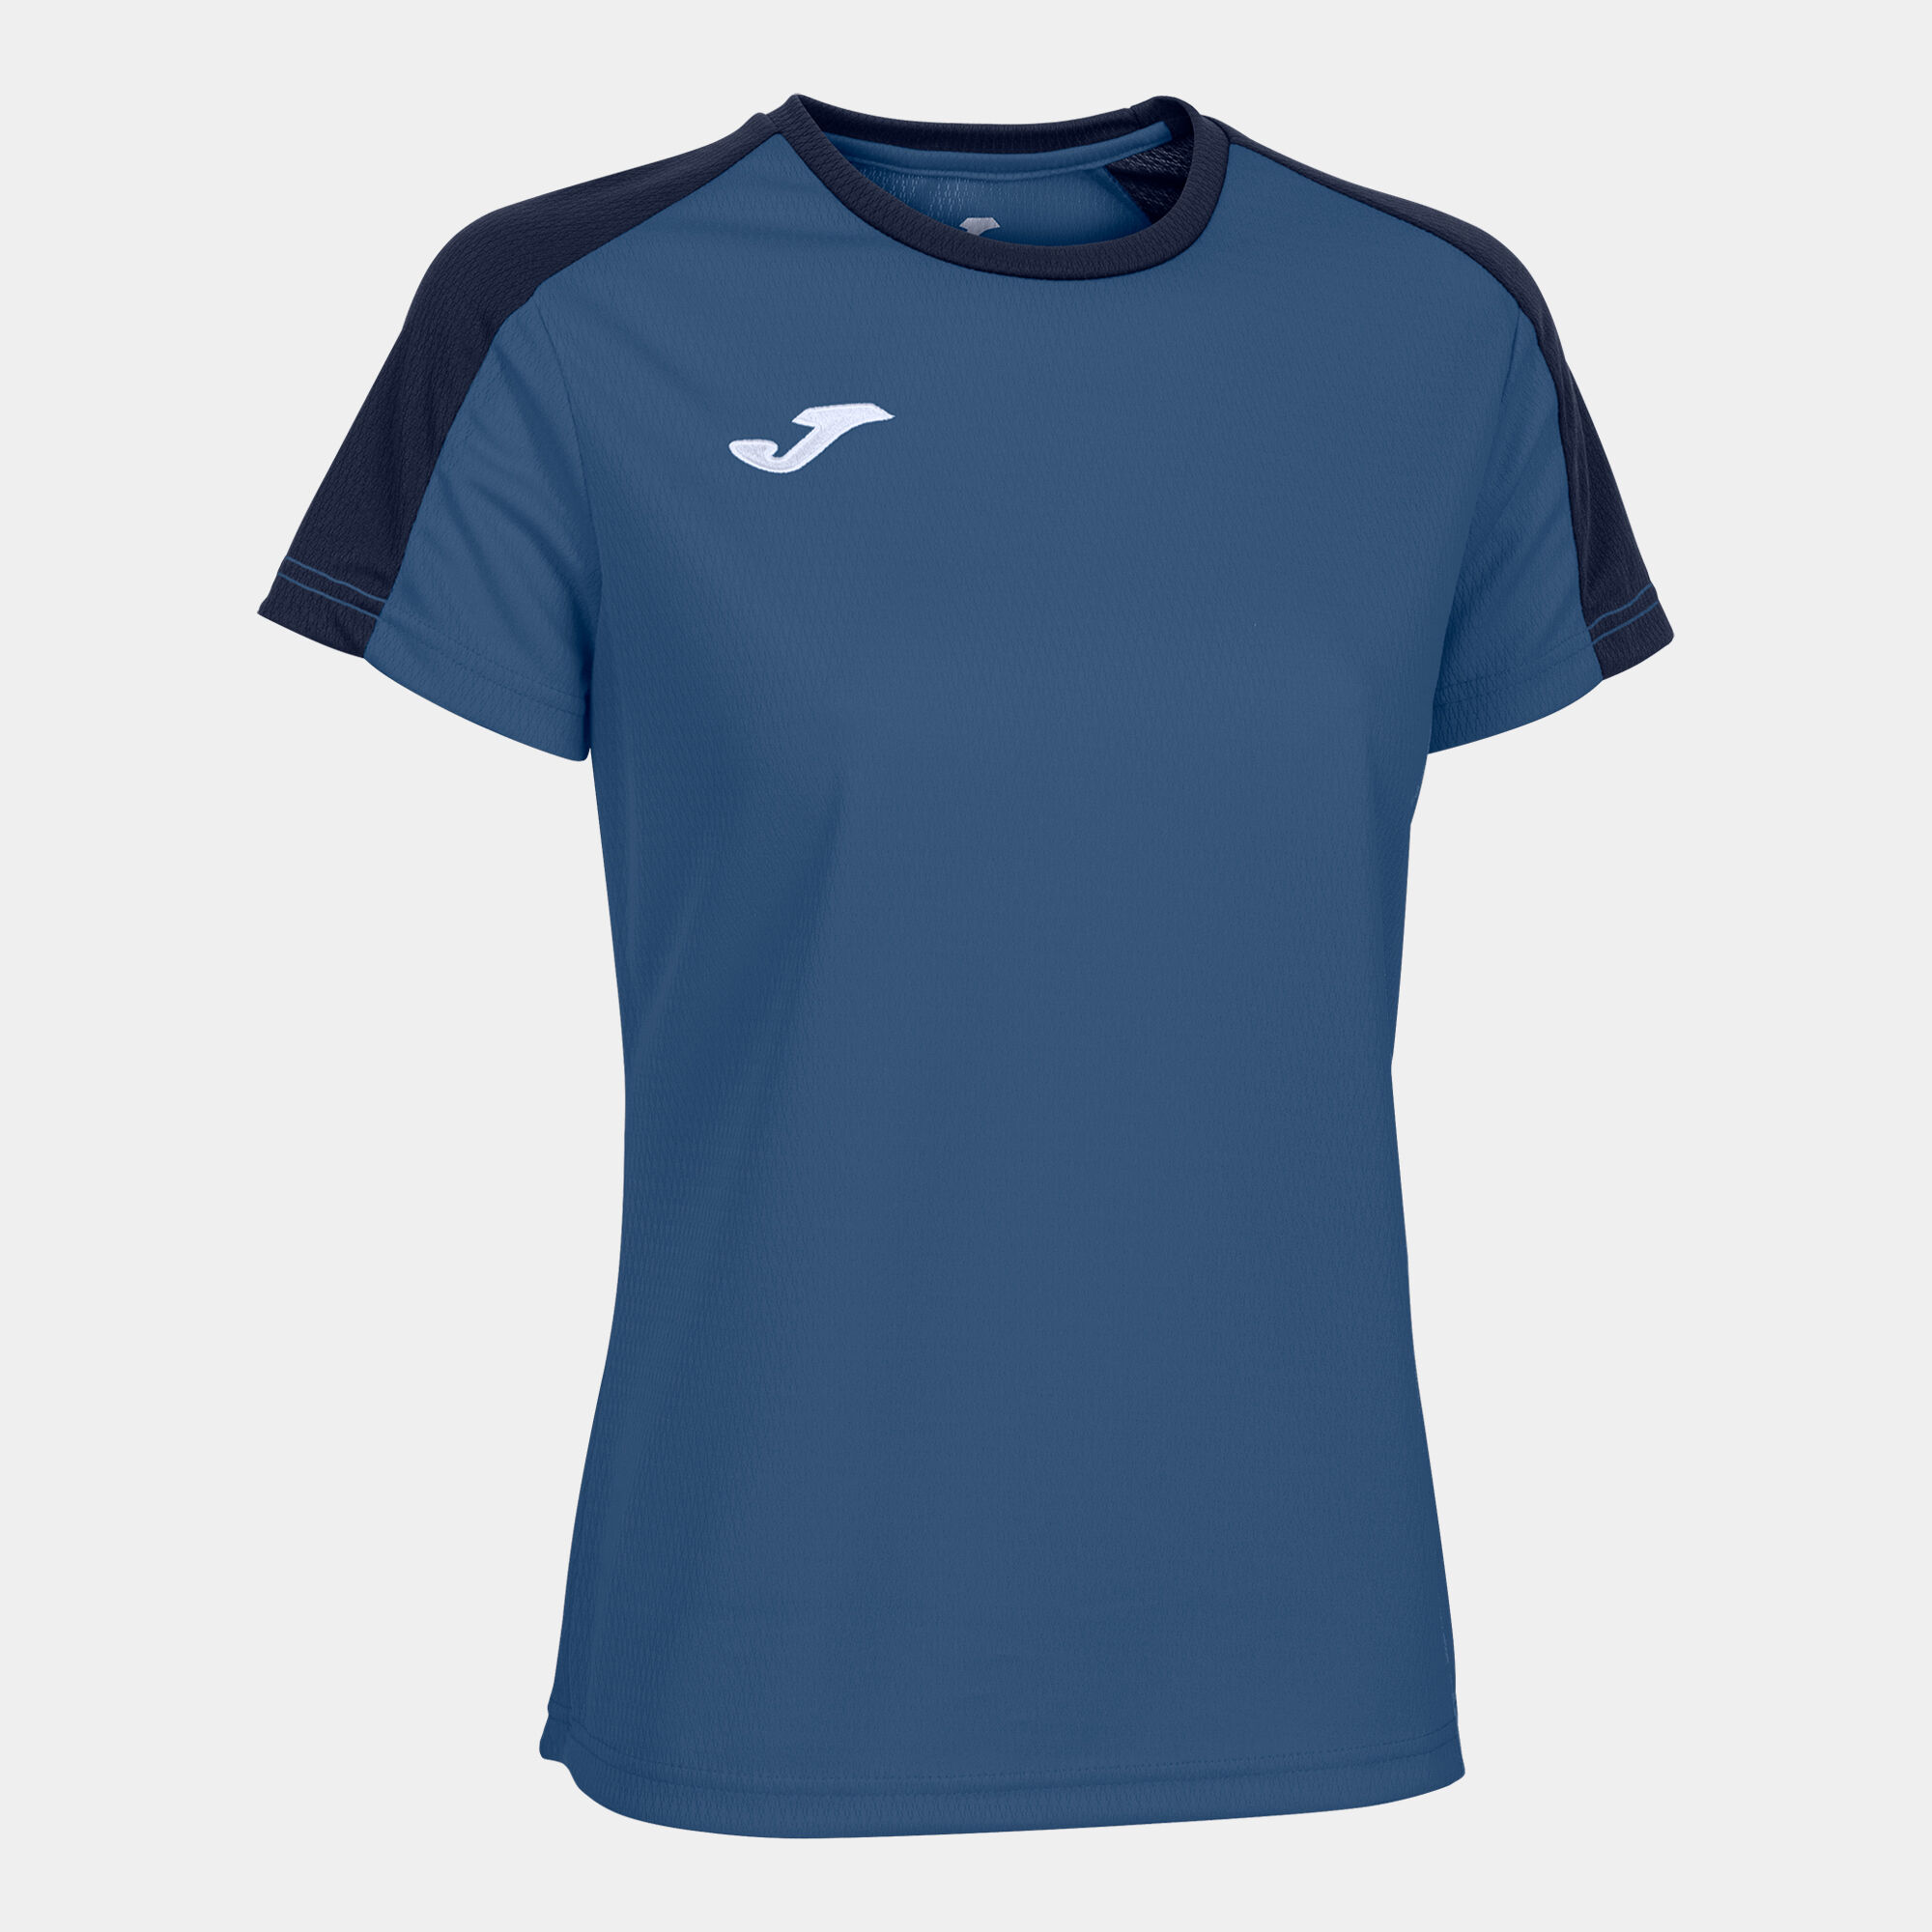 Camiseta manga corta mujer Eco Championship azul marino